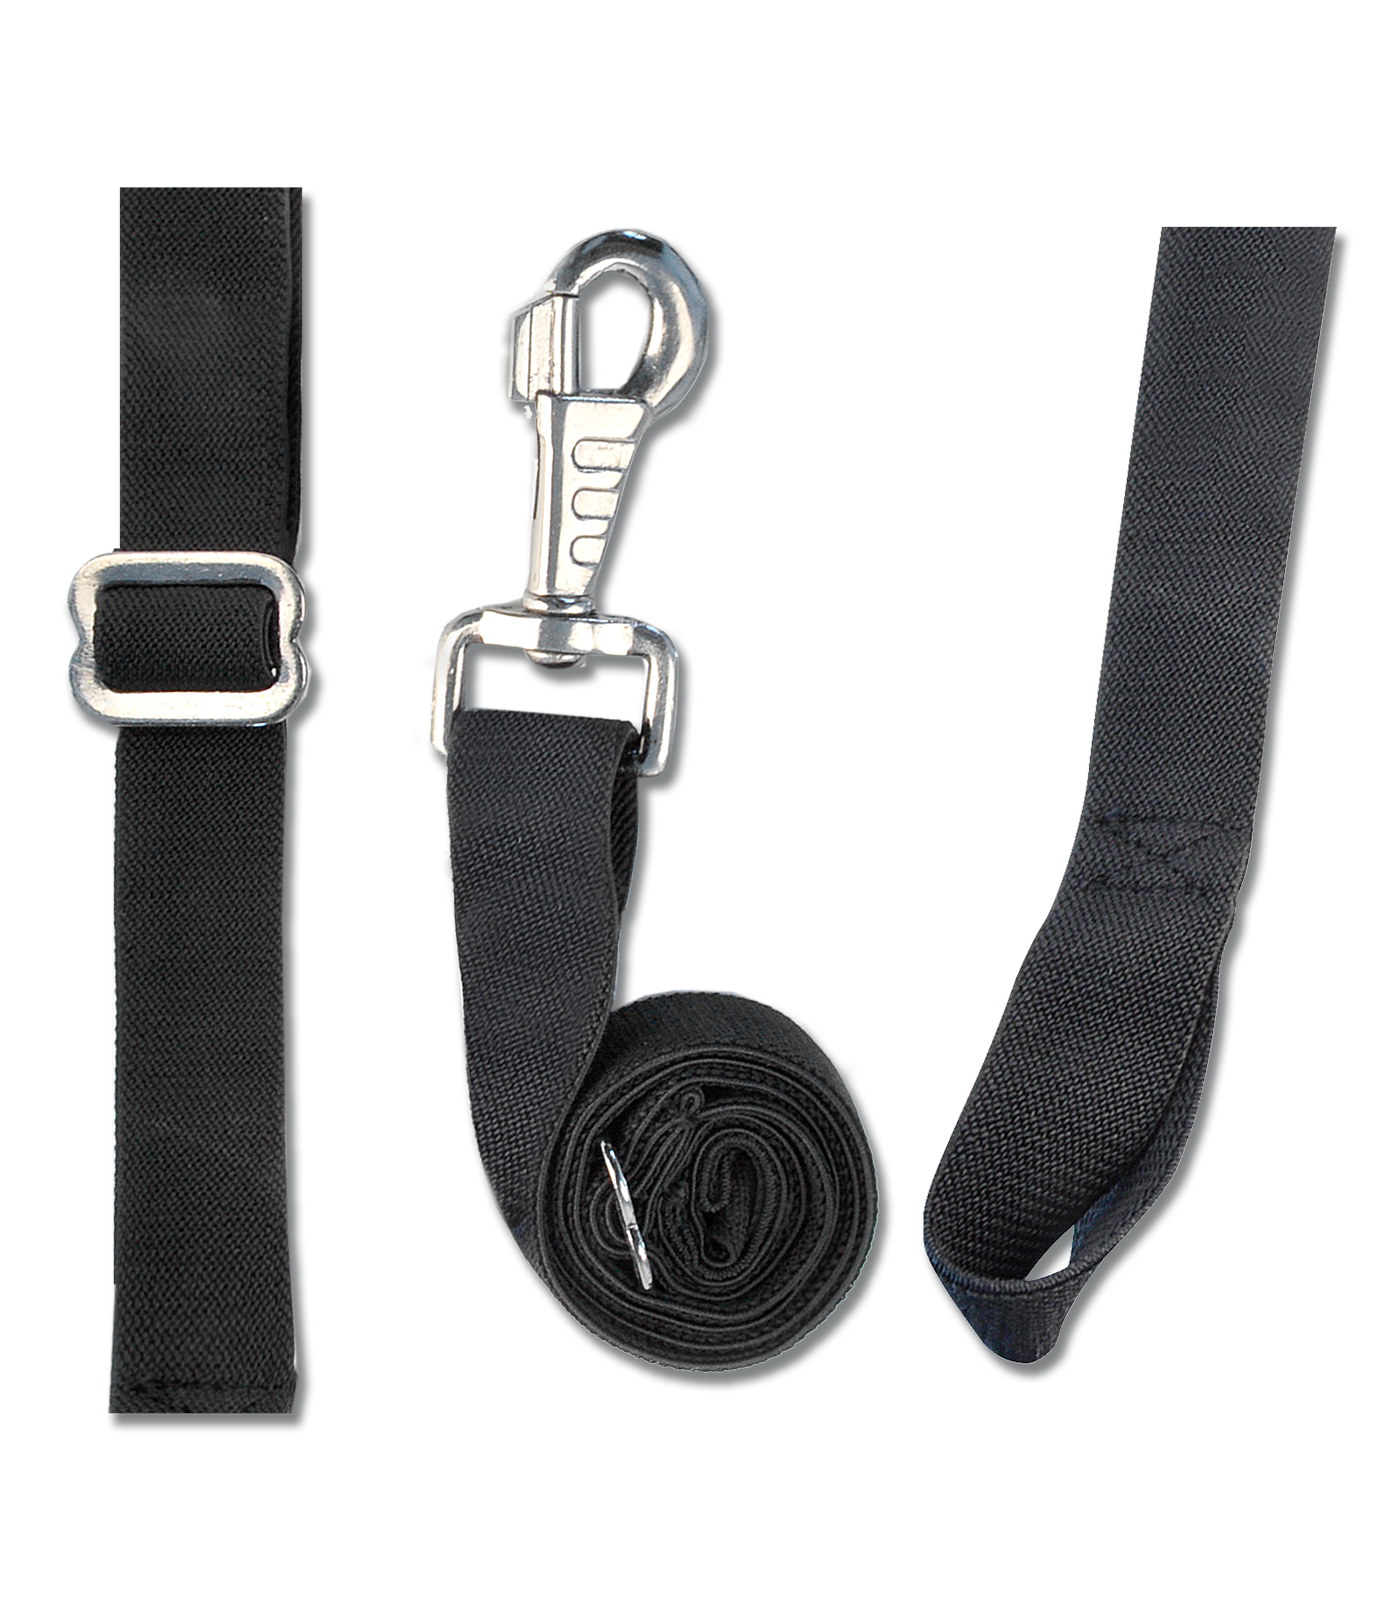 Cinturini elastici per gli arti, regolabili